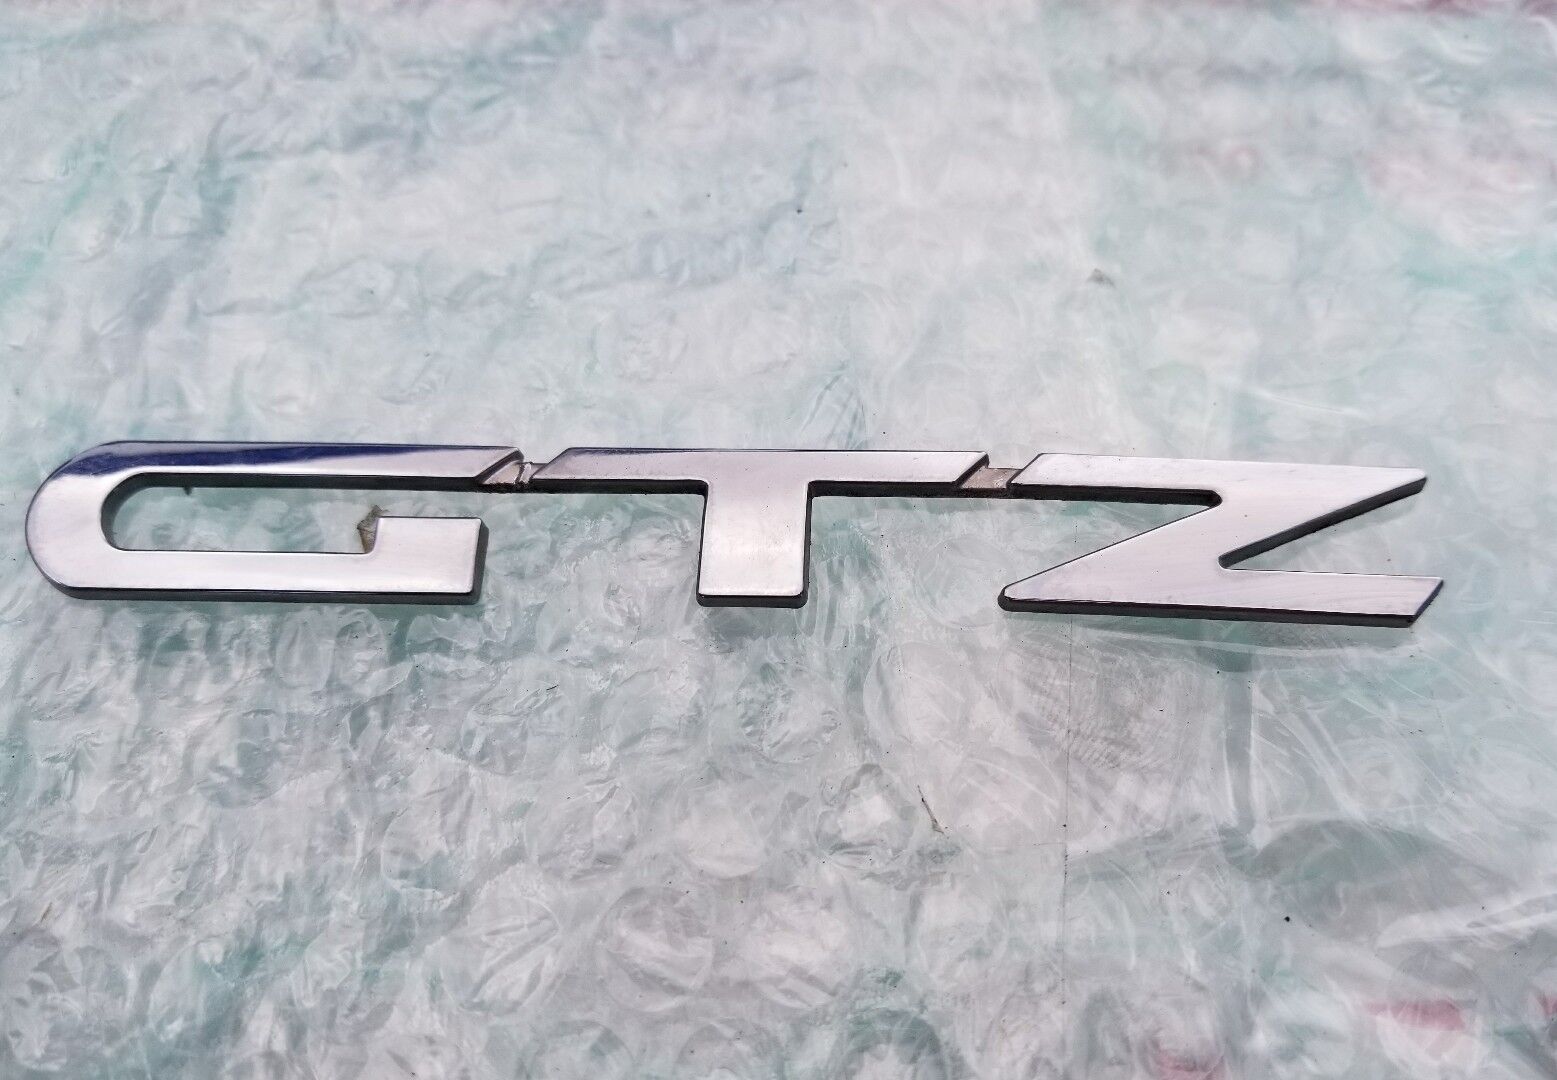 99 00 01 02 03 Mitsubishi Galant Trunk Emblem Badge Make Nameplate GTZ G T Z